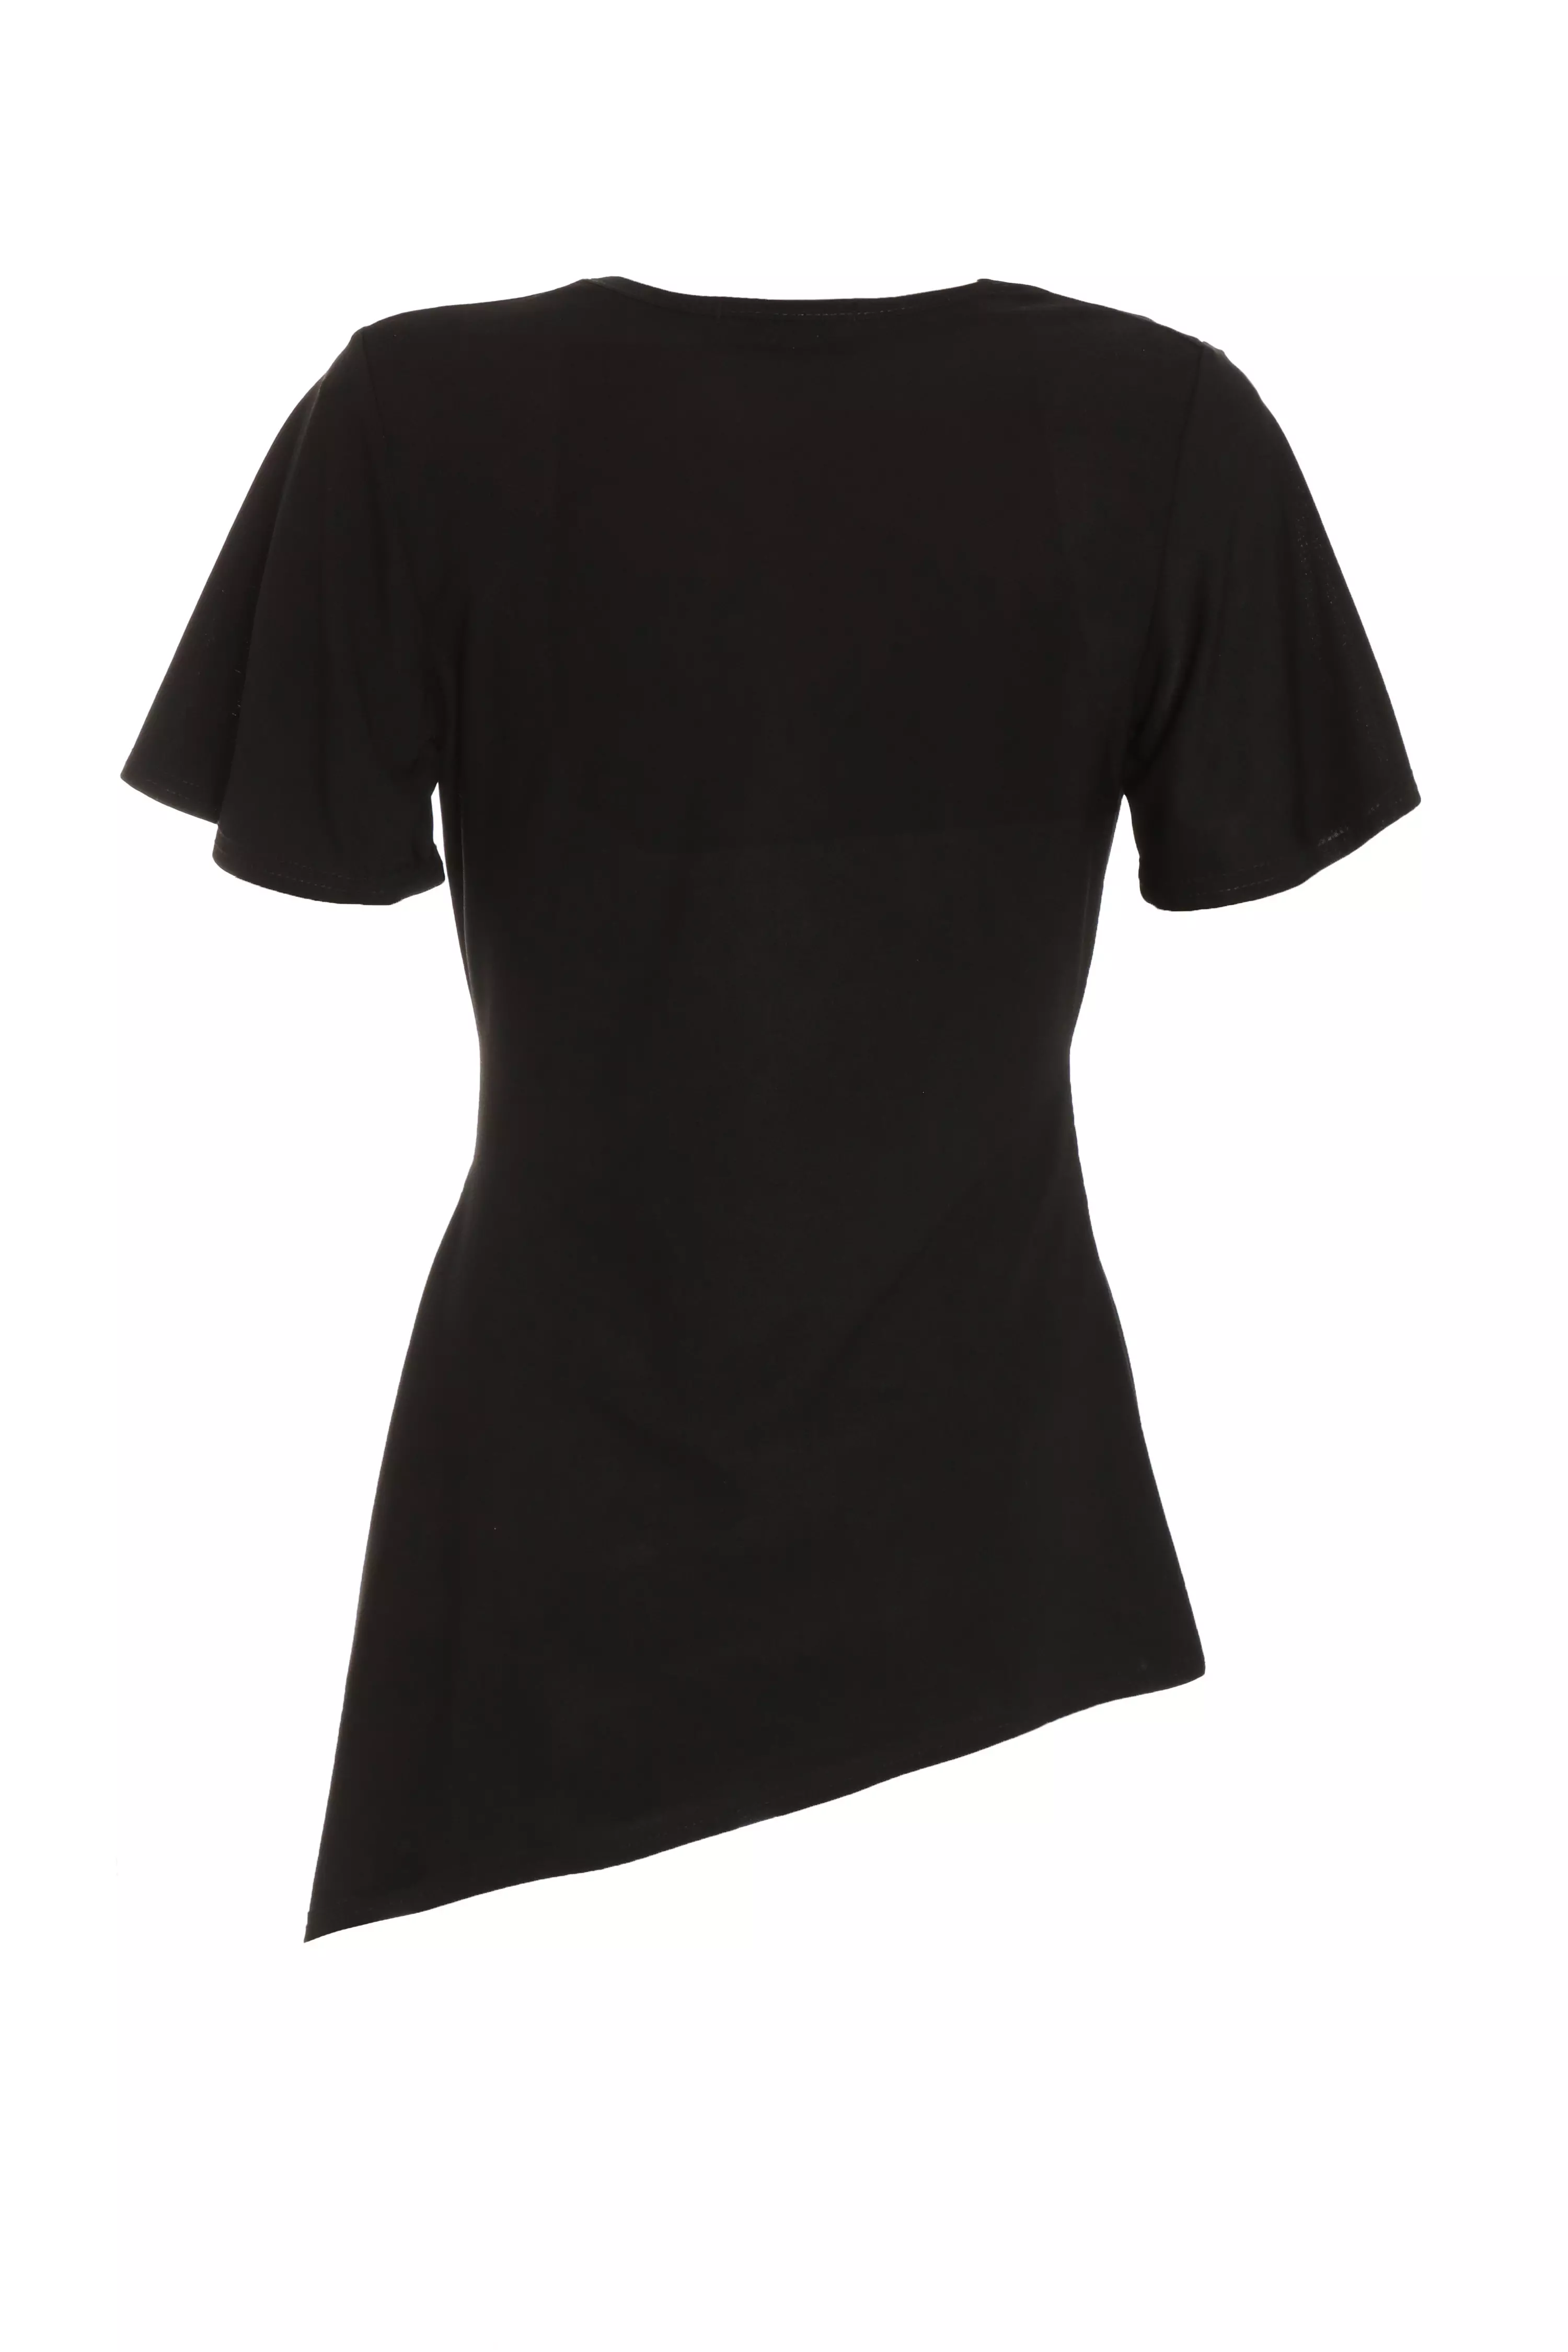 Black Buckle Asymmetric Top - QUIZ Clothing